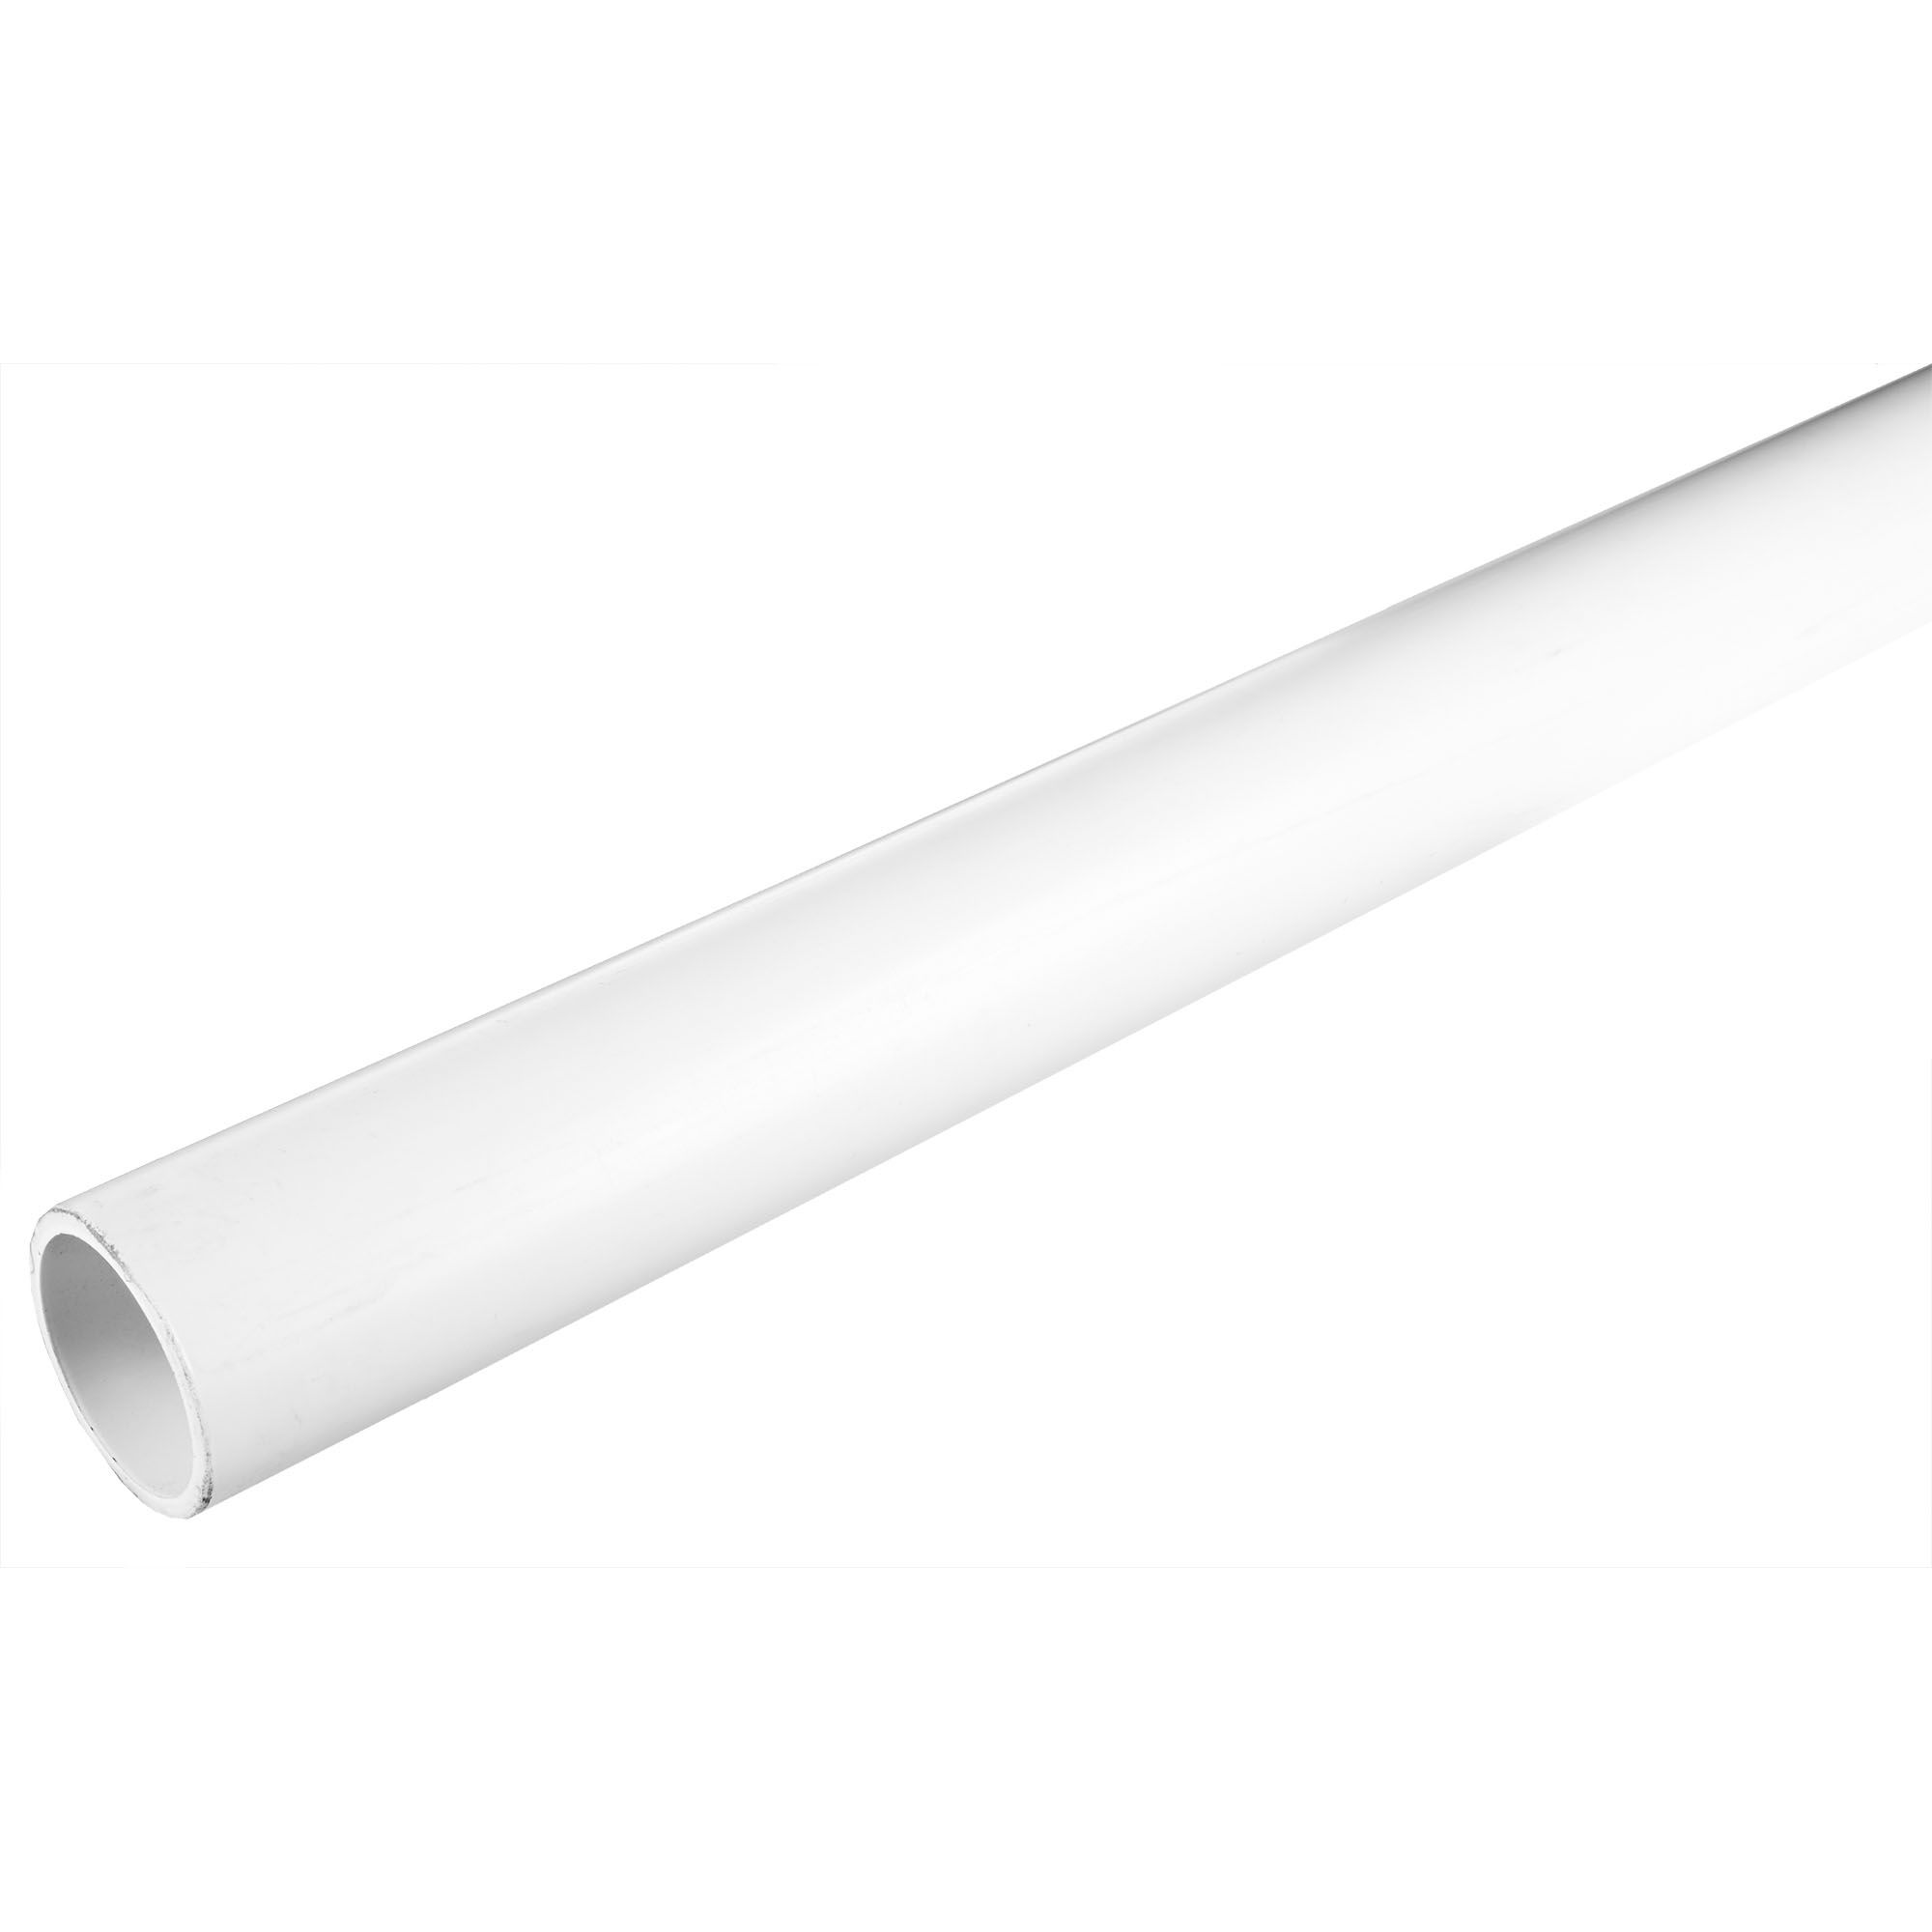 Rigid PCV Pipe, White, 1.5" x 10ft Schedule 40